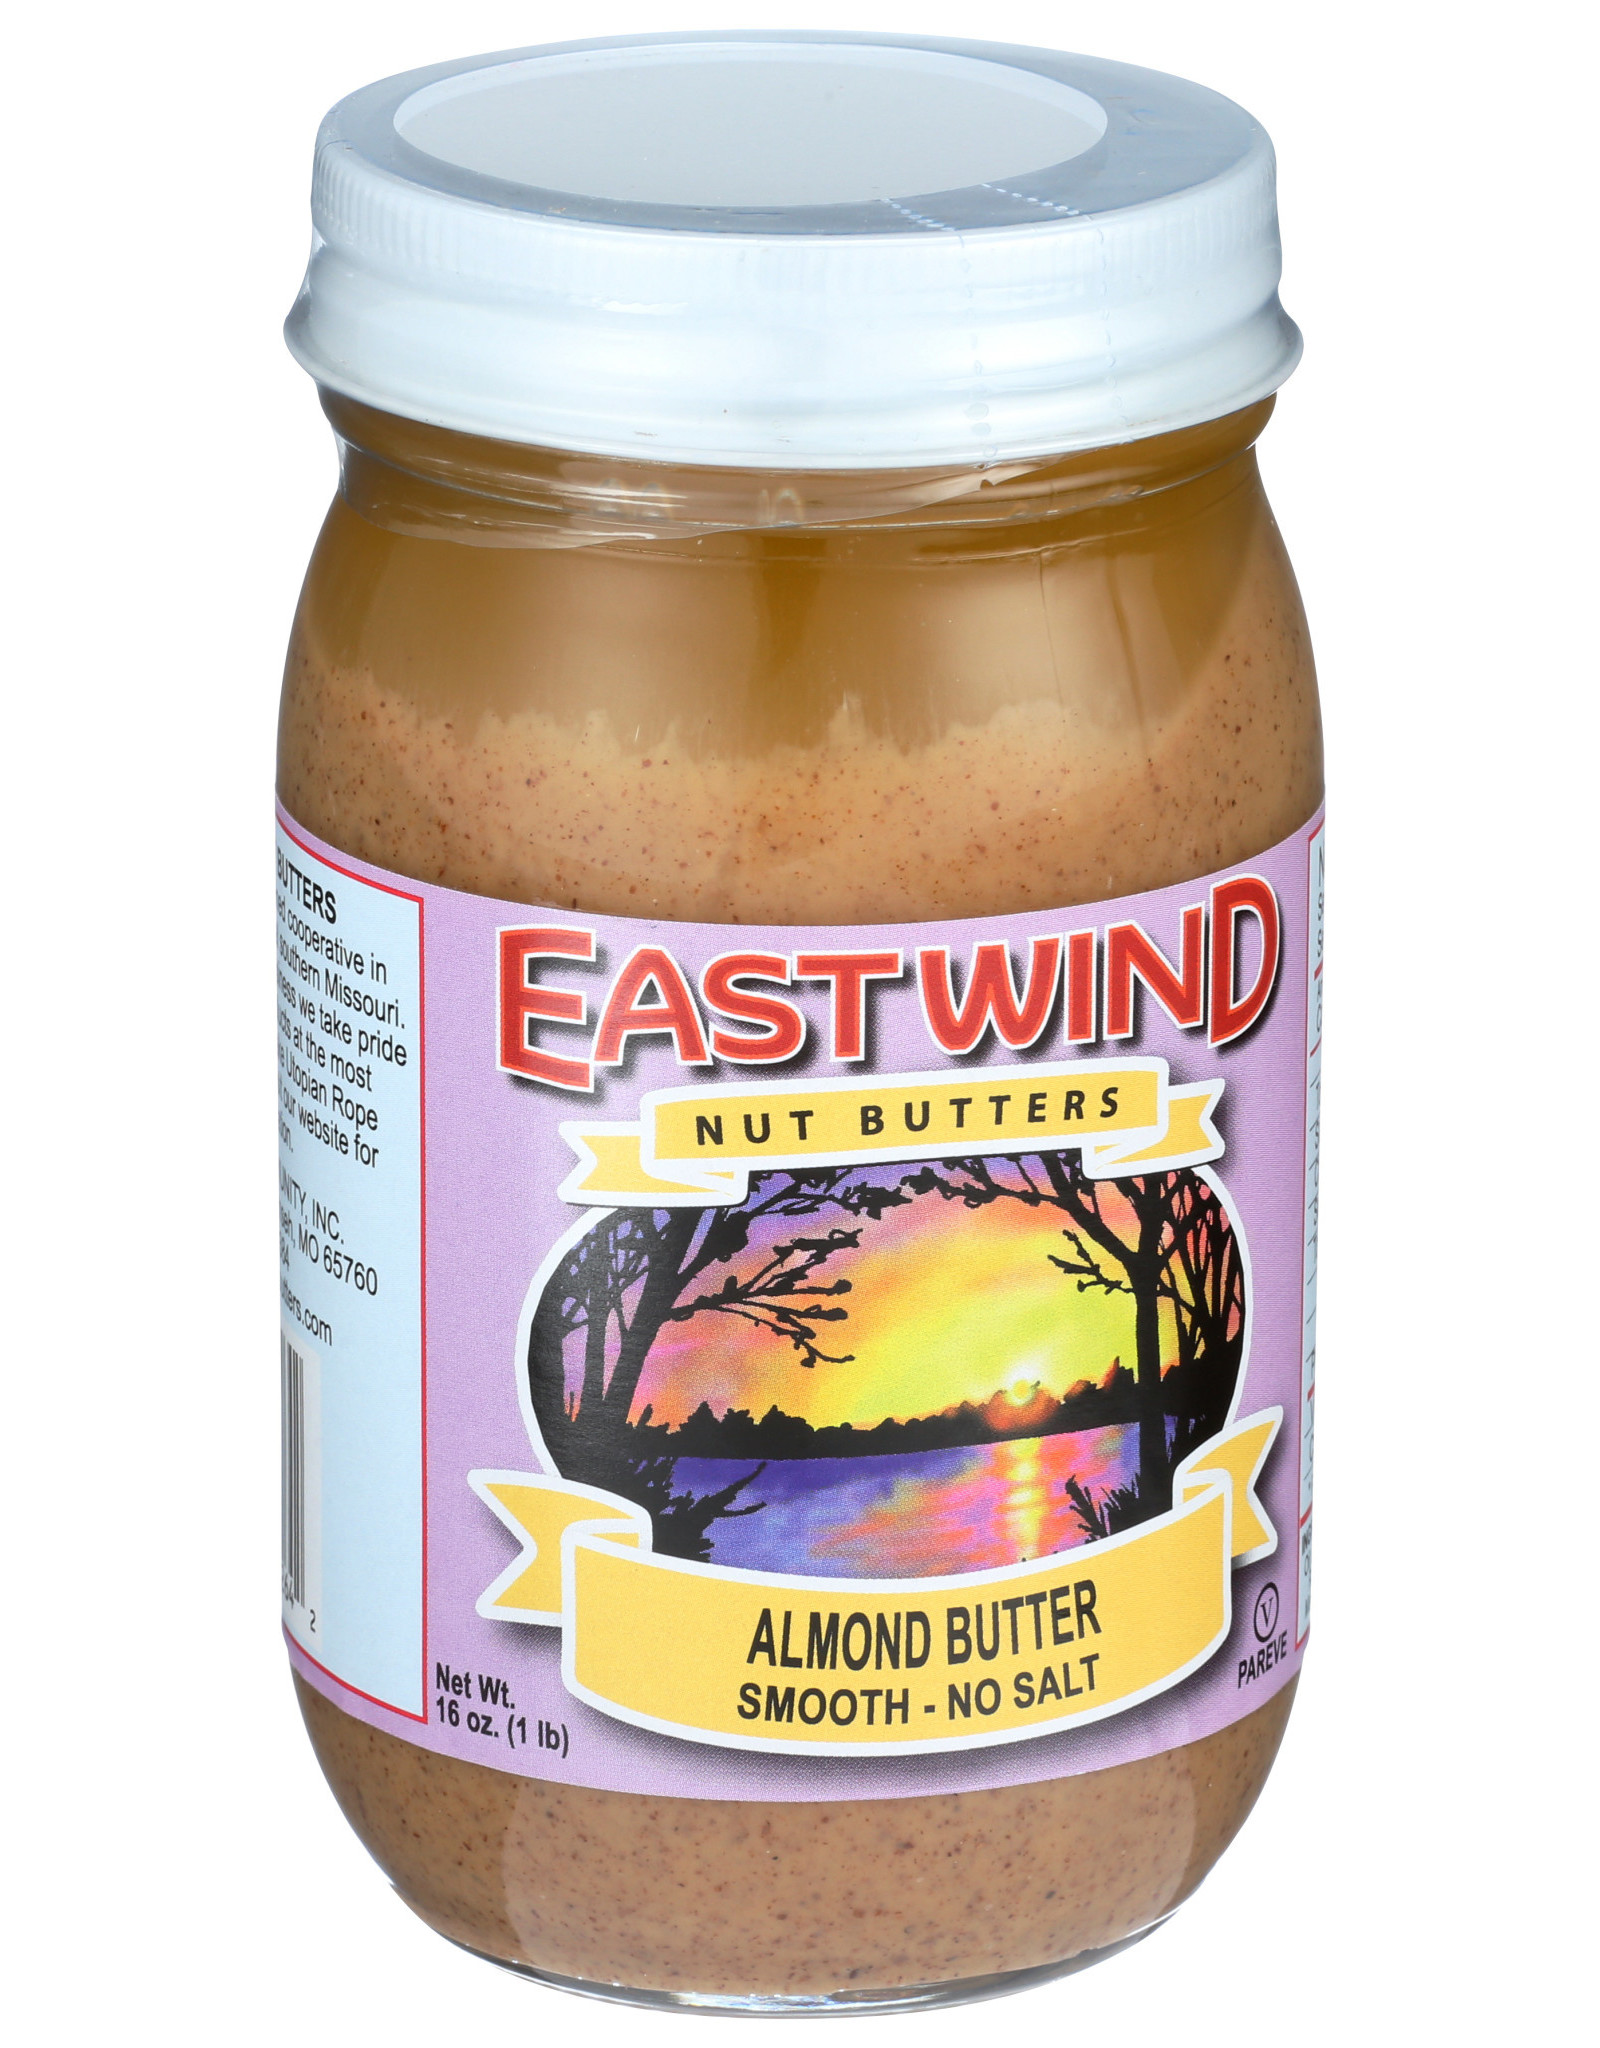 Eastwind Smooth Almond Butter W No Salt 16 oz